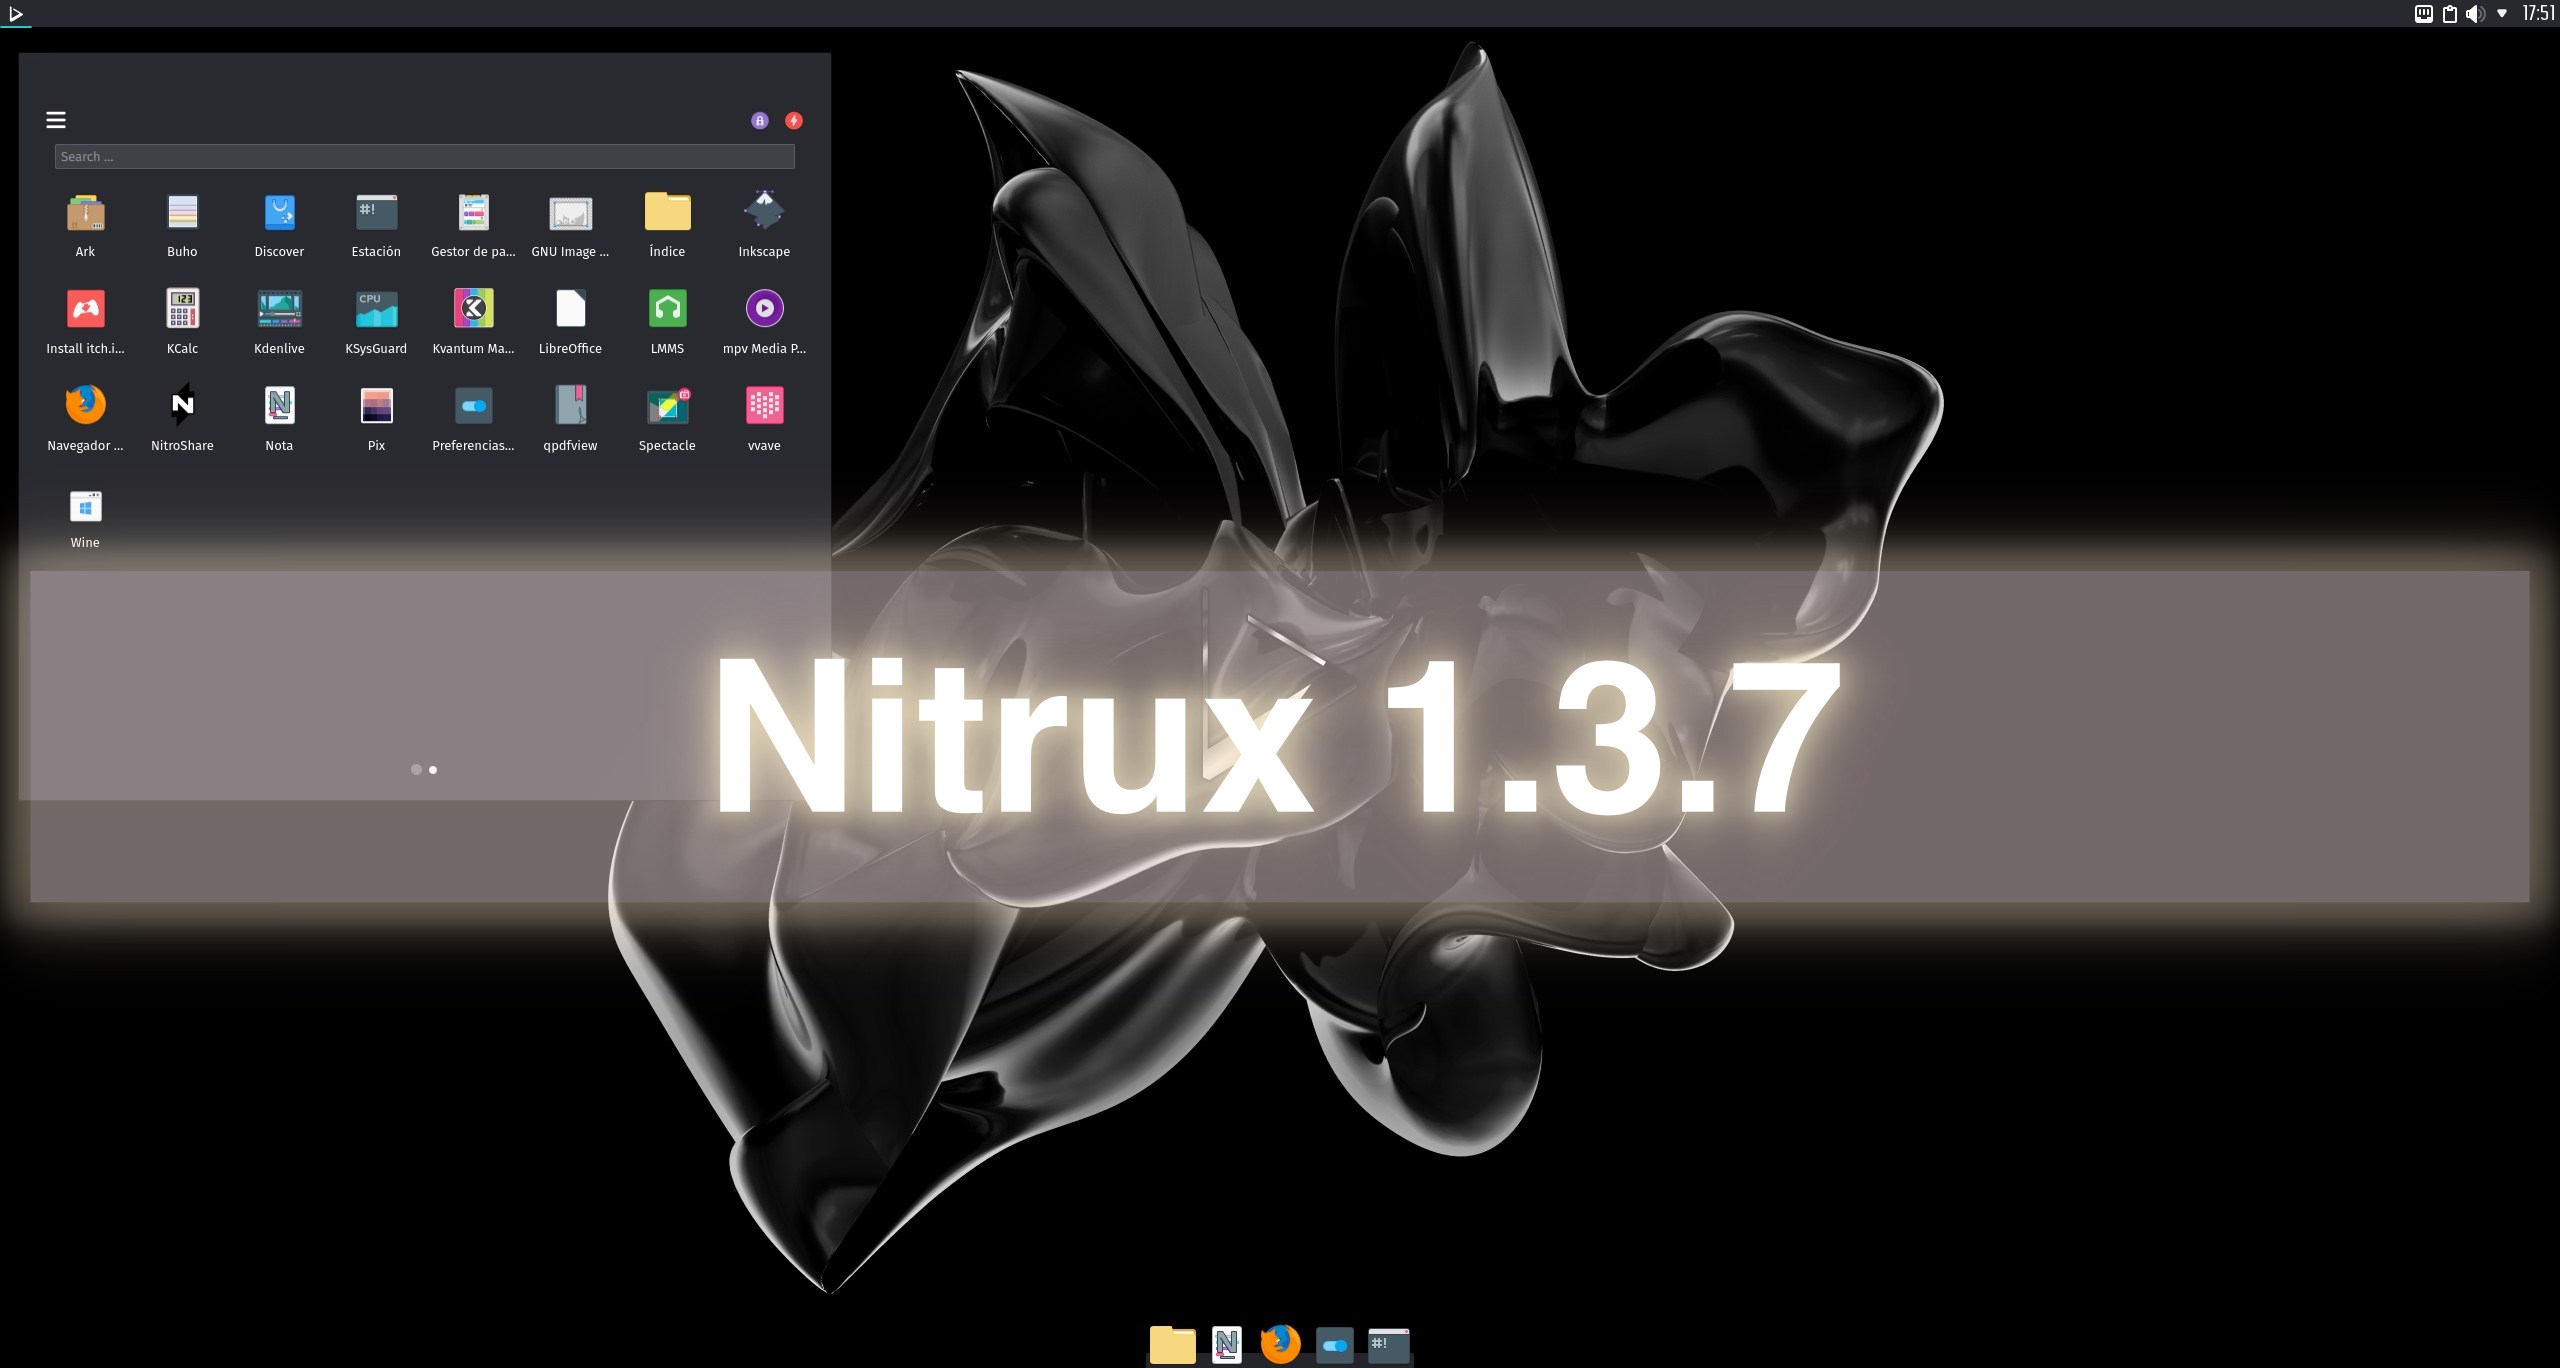 Nitrux 1.3.7 Released with New Default Applications Menu, KDE Plasma 5.20.5